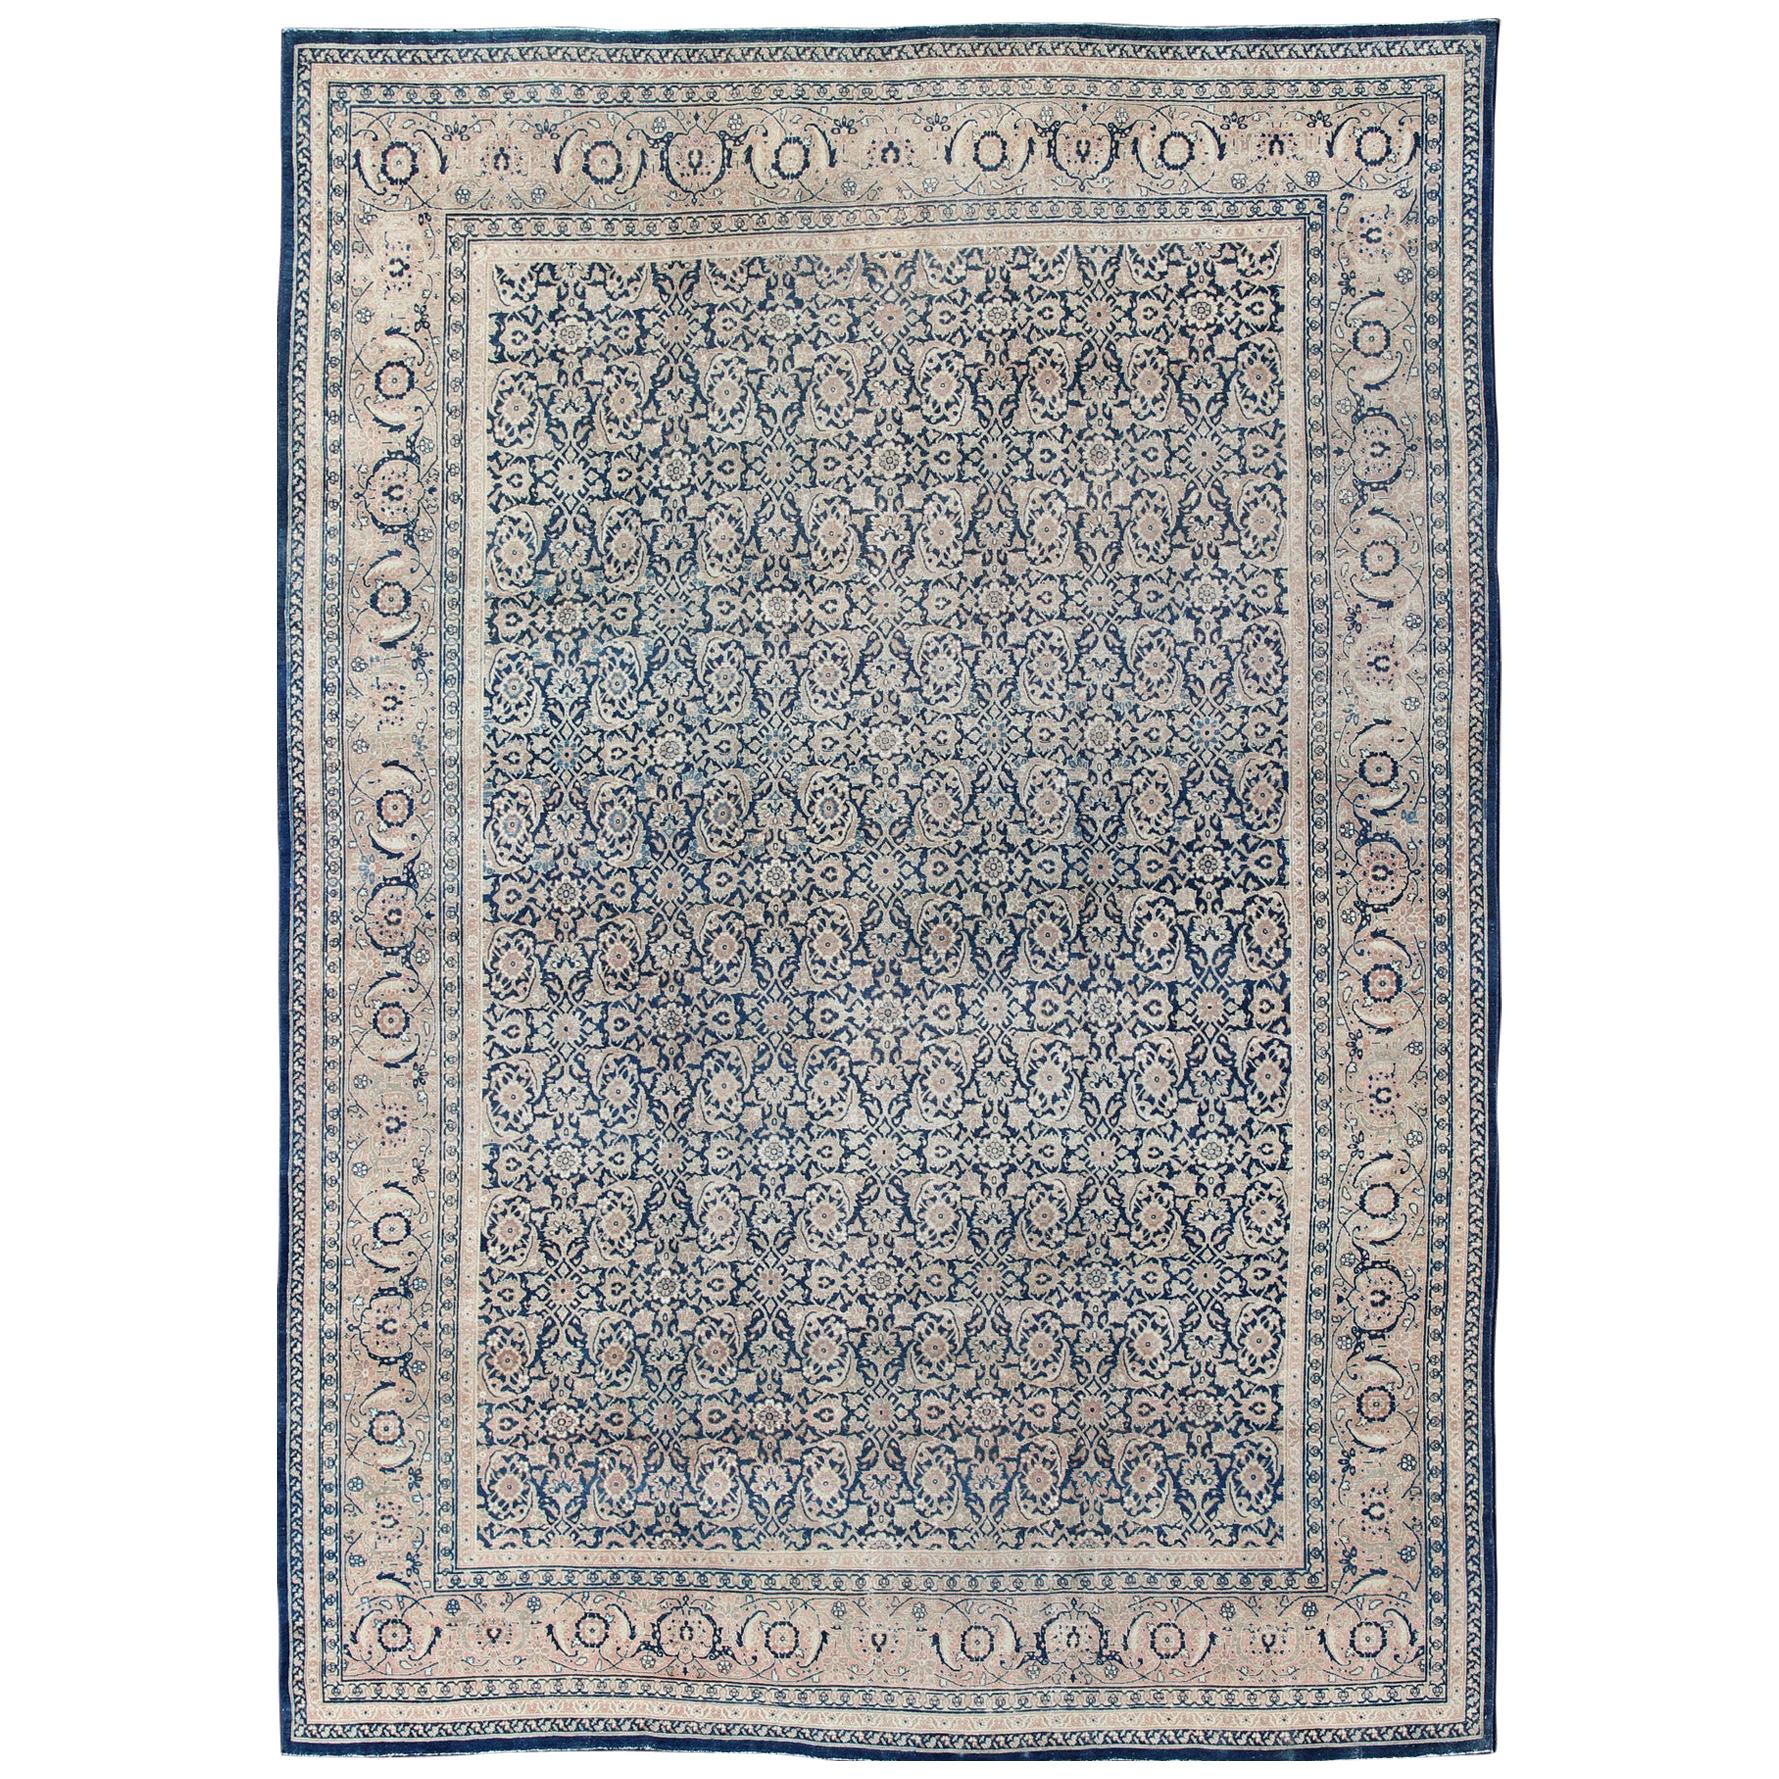 Antique Persian Tabriz Carpet with Geometric Herati Design in Dark Blue Tones For Sale